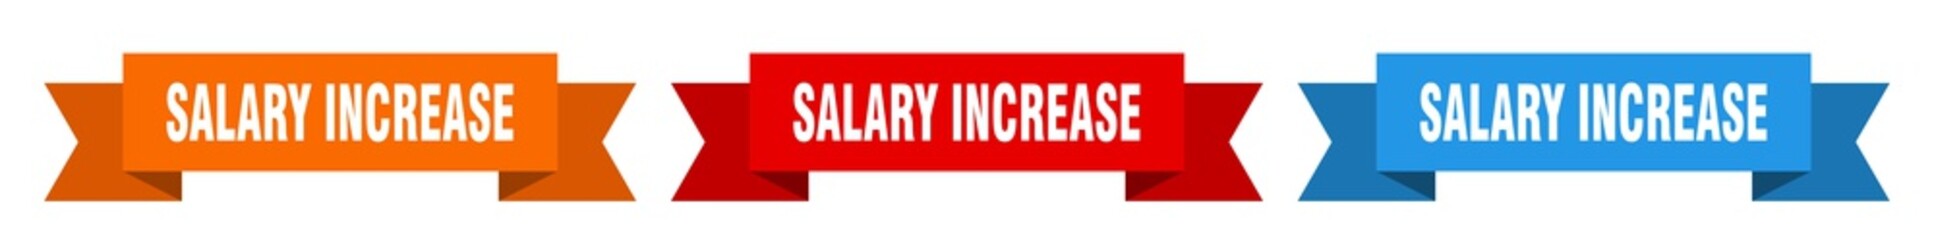 salary increase ribbon. salary increase isolated paper sign. banner